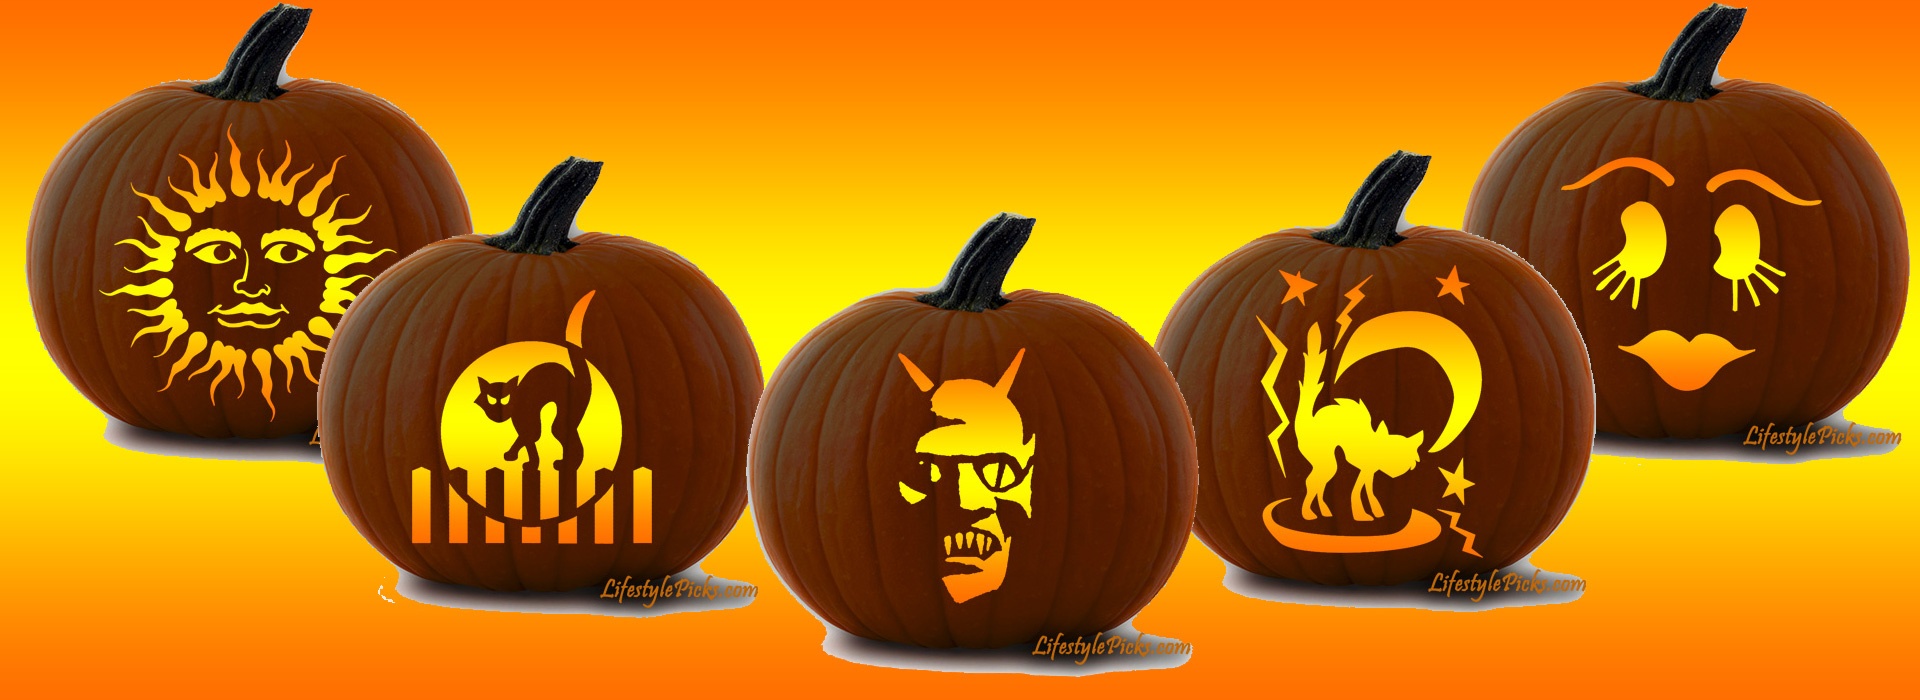 Free Pumpkin Carving Stencils - Pirate, Cat, Aztec Sun, Michael - Halloween Pumpkin Carving Stencils Free Printable